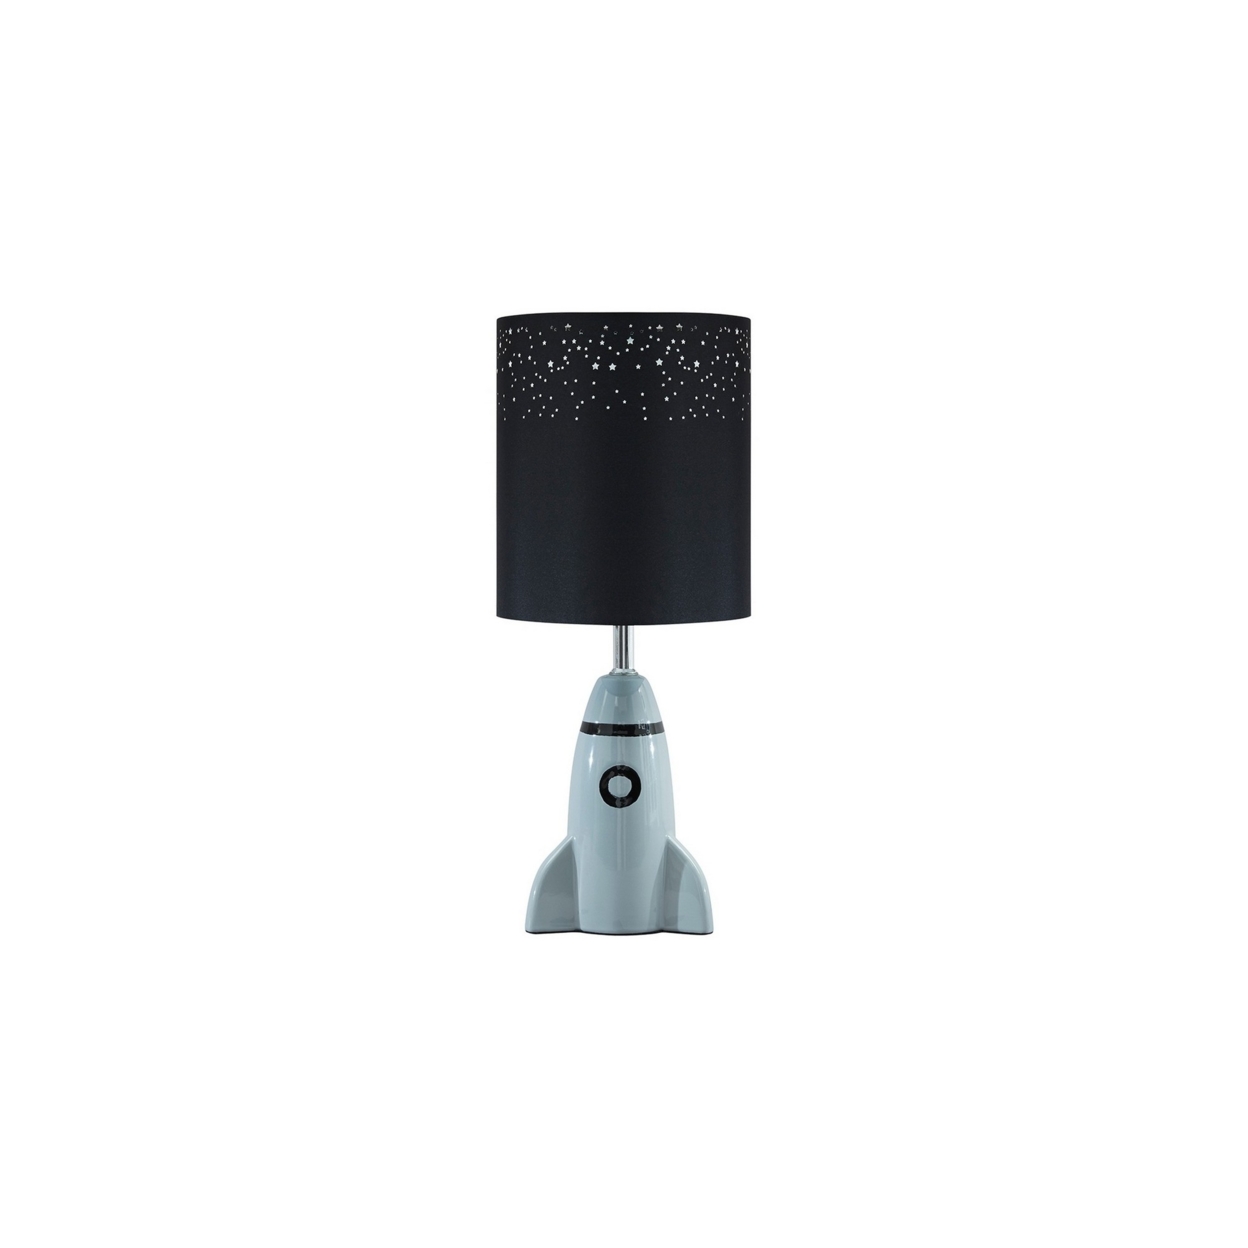 Rocket Ceramic Base Table Lamp With Fabric Shade, Black And Gray- Saltoro Sherpi